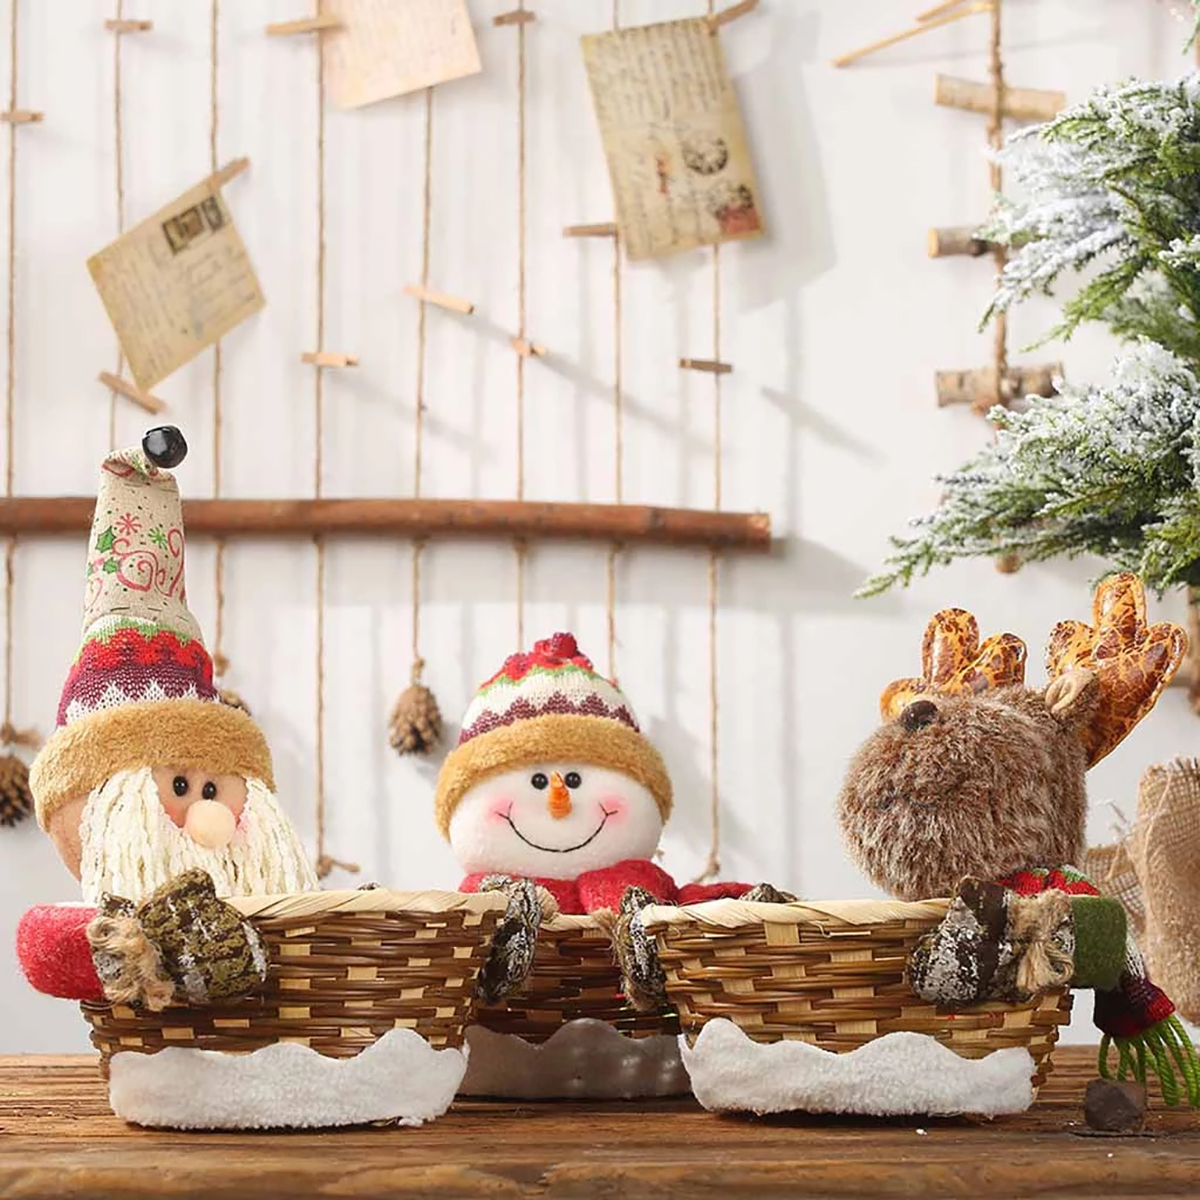 Christmas-Decoration-Candy-Basket-Desktop-Ornaments-Children-Candy-Basket-Decoration-Candy-Box-1753094-3